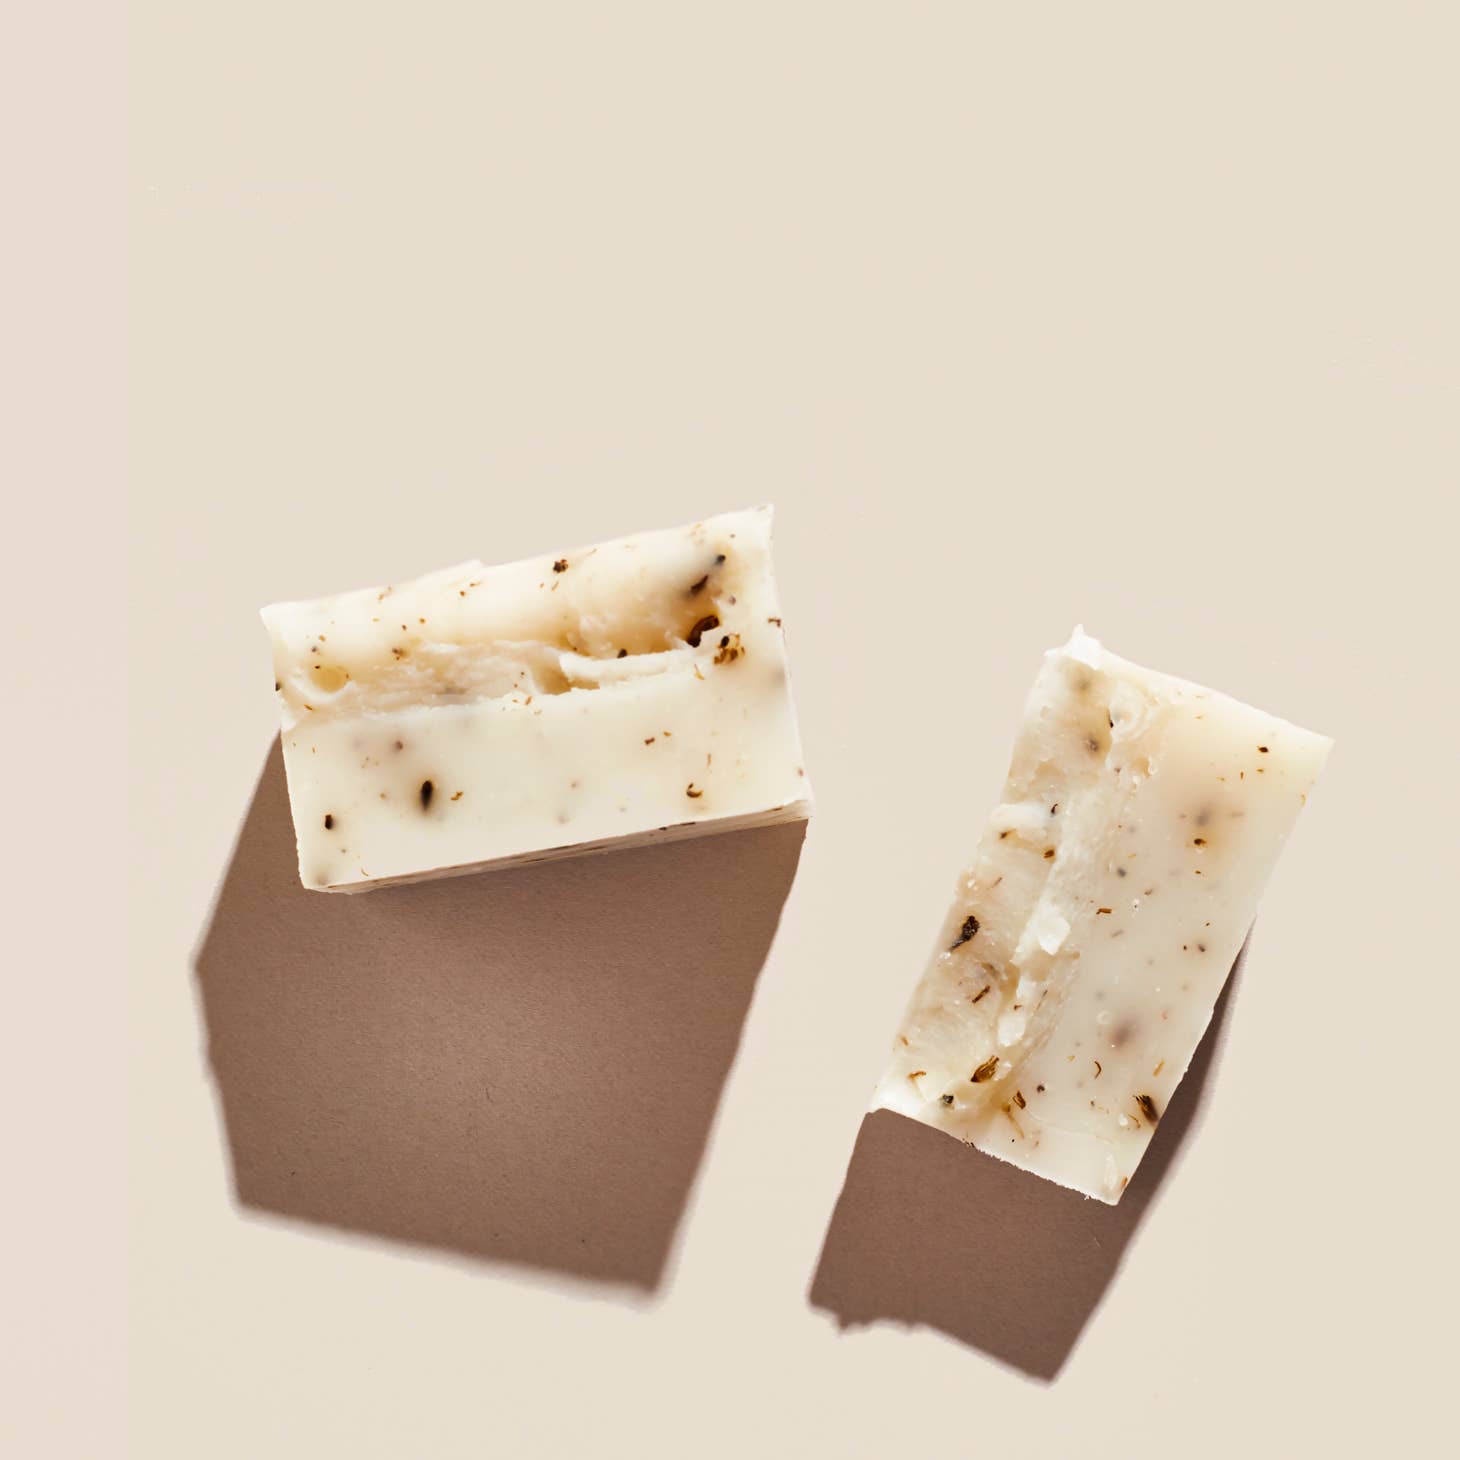 Palermo's Lavender + Sage soap bar, shown broken in half.